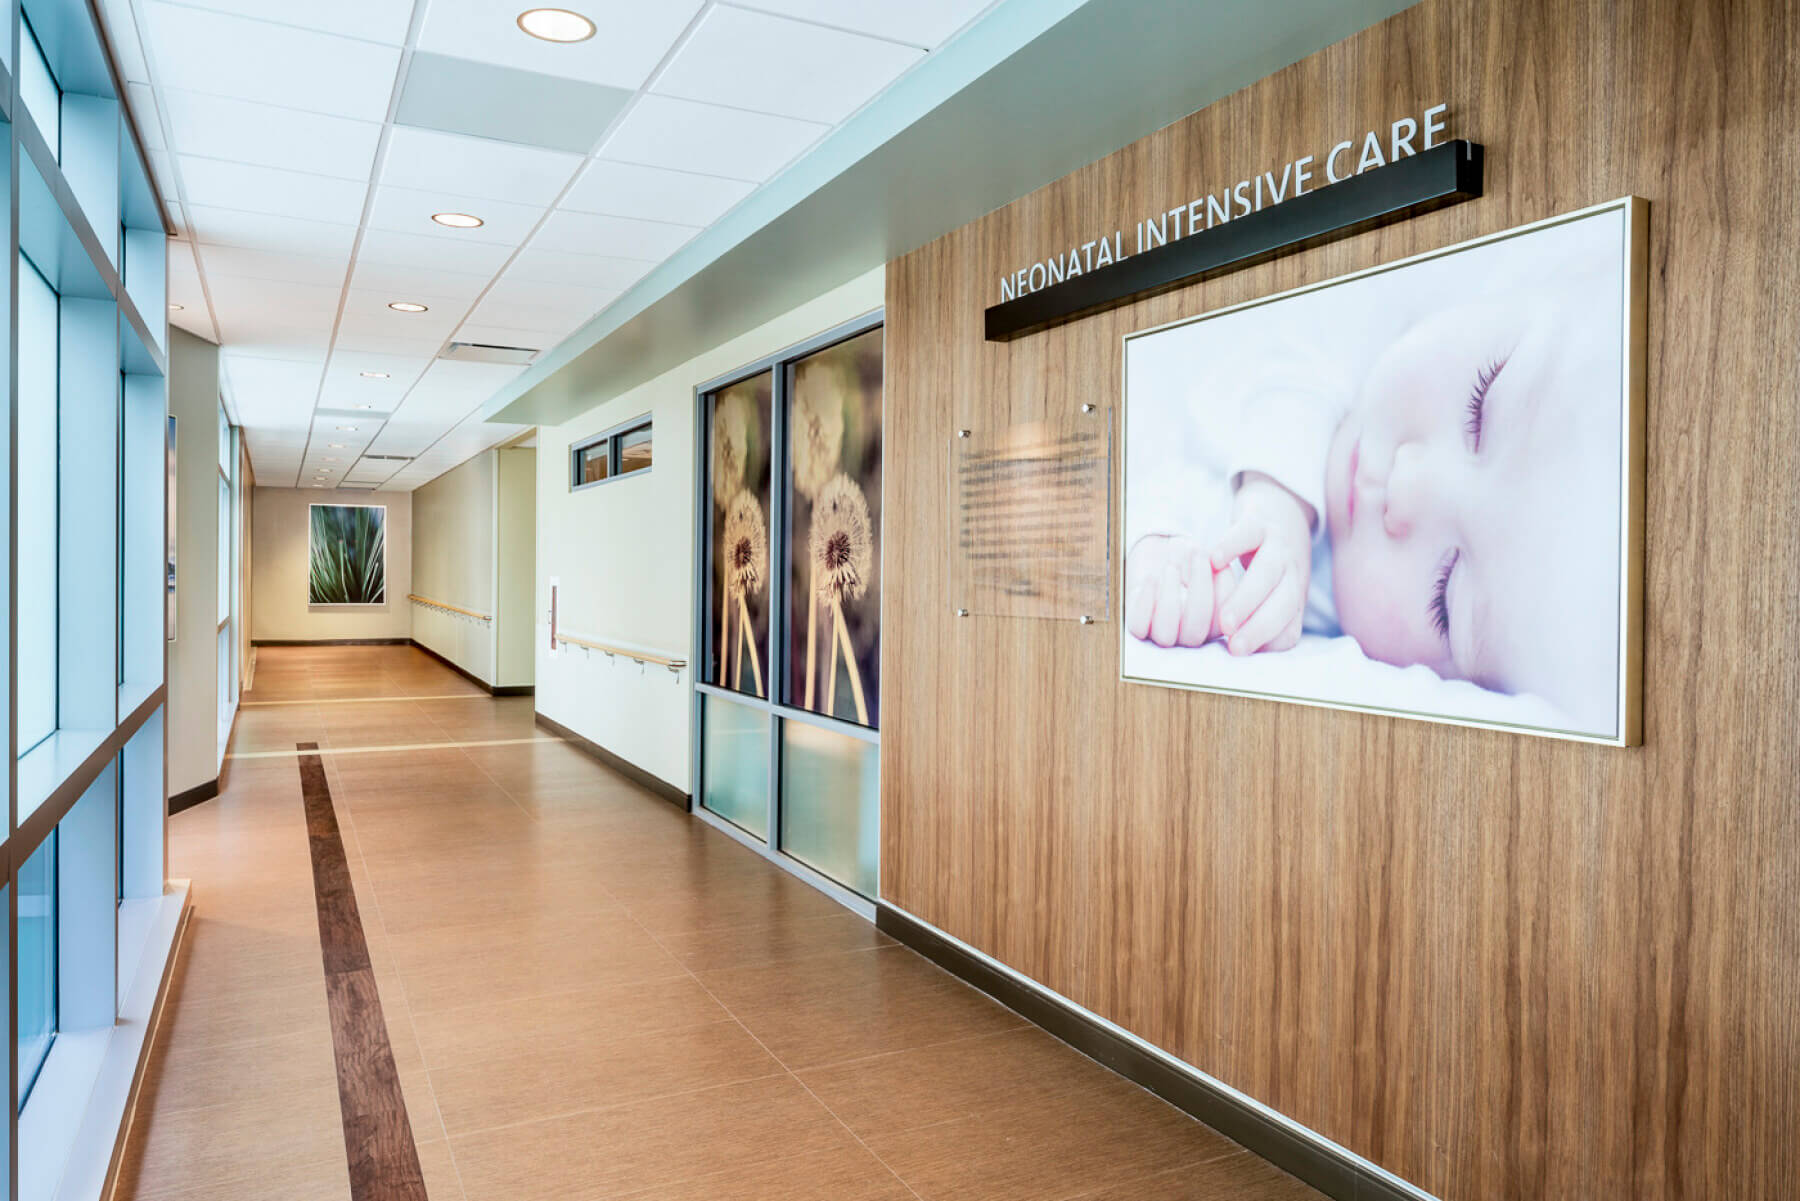 hallway to neonatal intensive care unit